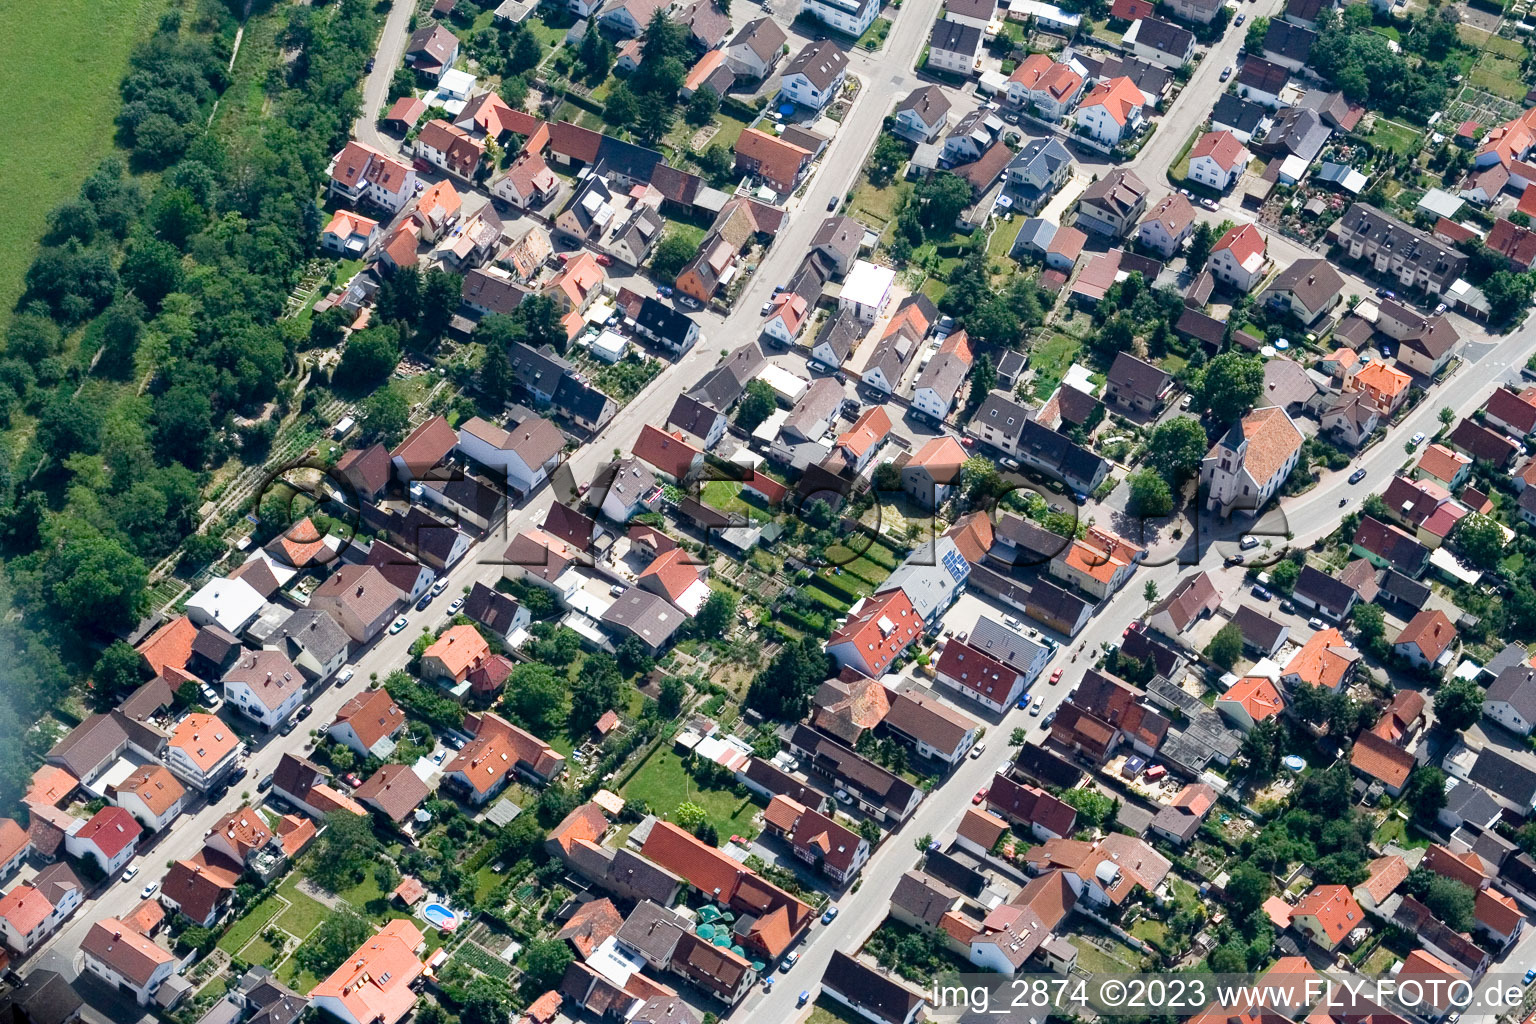 Vue oblique de Quartier Leopoldshafen in Eggenstein-Leopoldshafen dans le département Bade-Wurtemberg, Allemagne